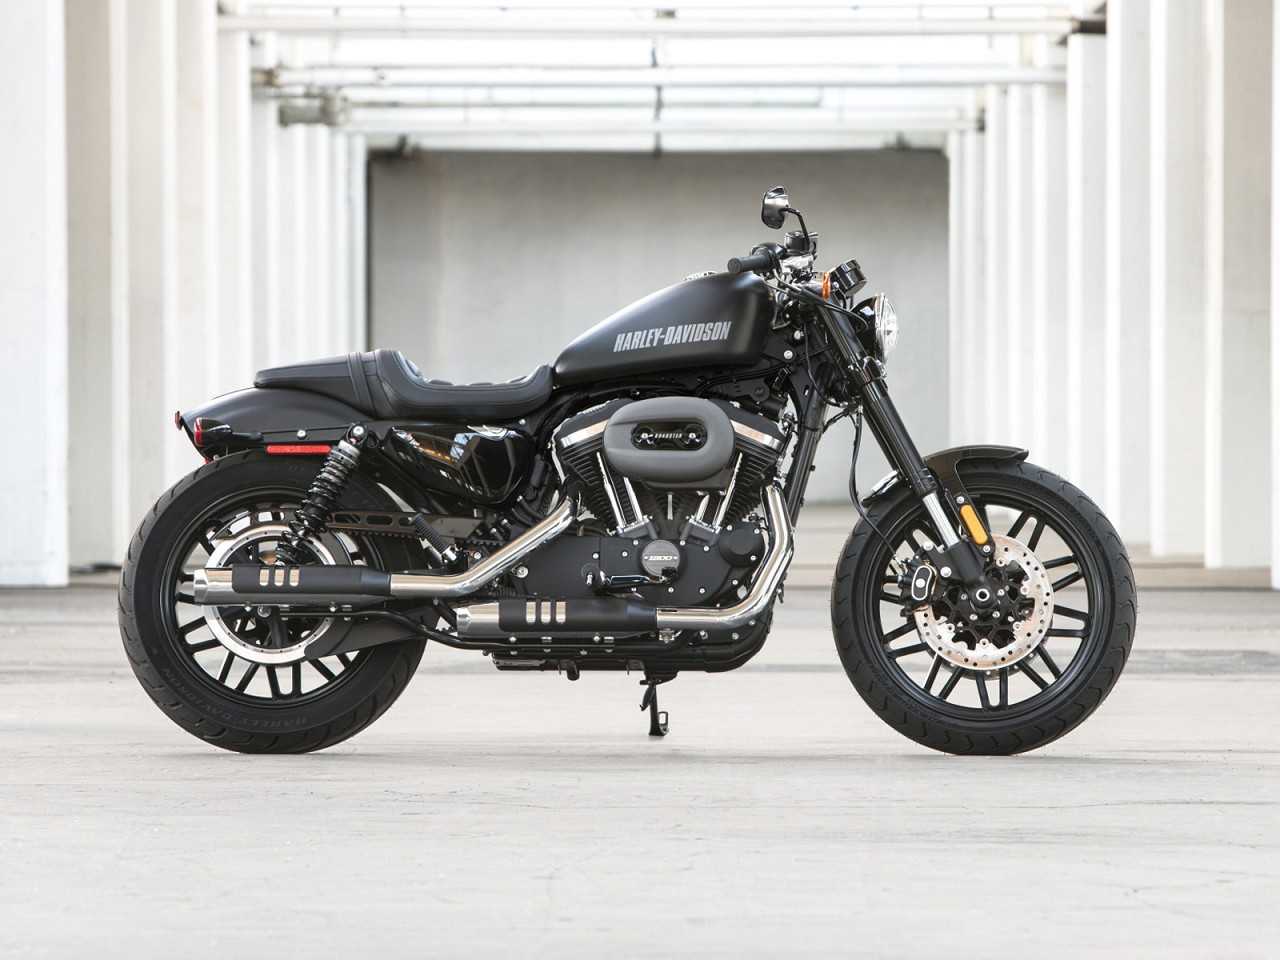 Harley-DavidsonRoadster 2017 - lateral